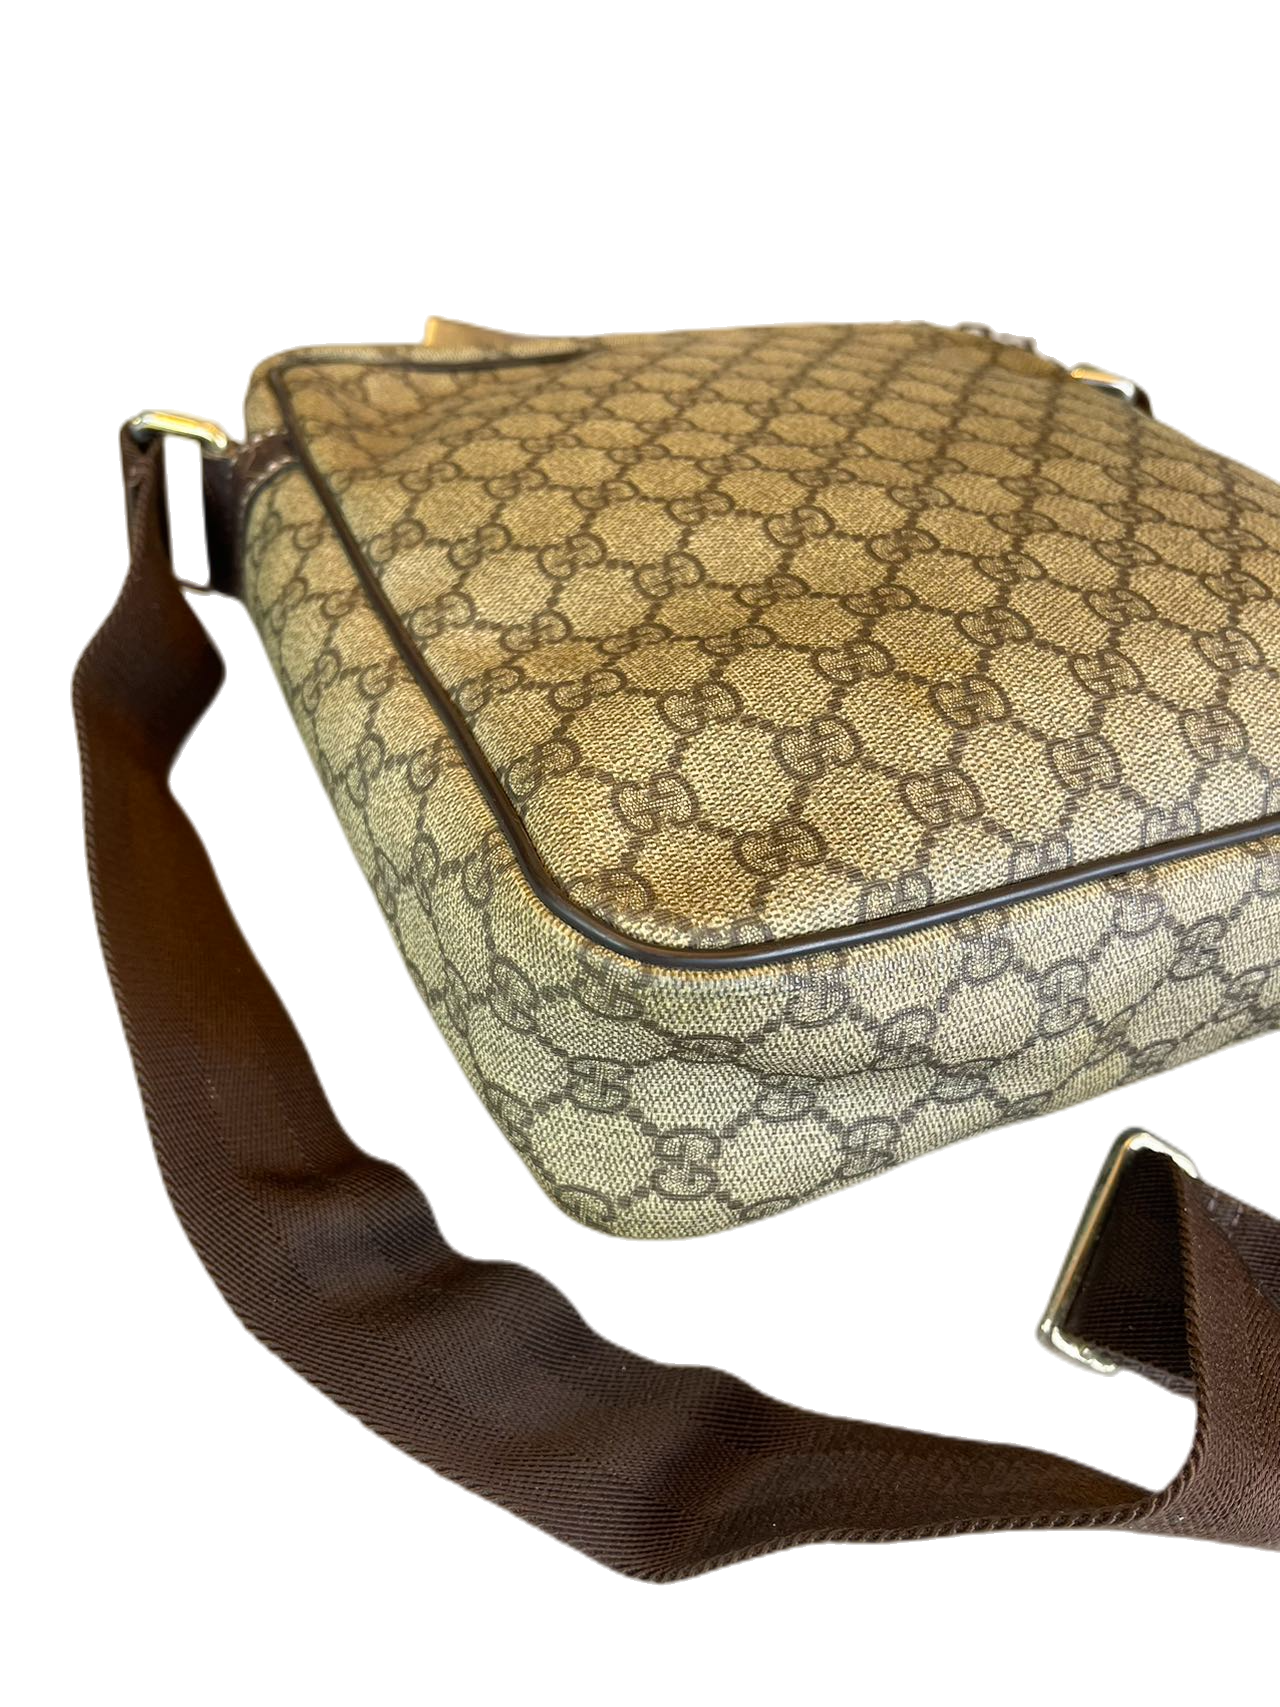 Preloved Gucci GG logo Print Messenger Bags Crossbody